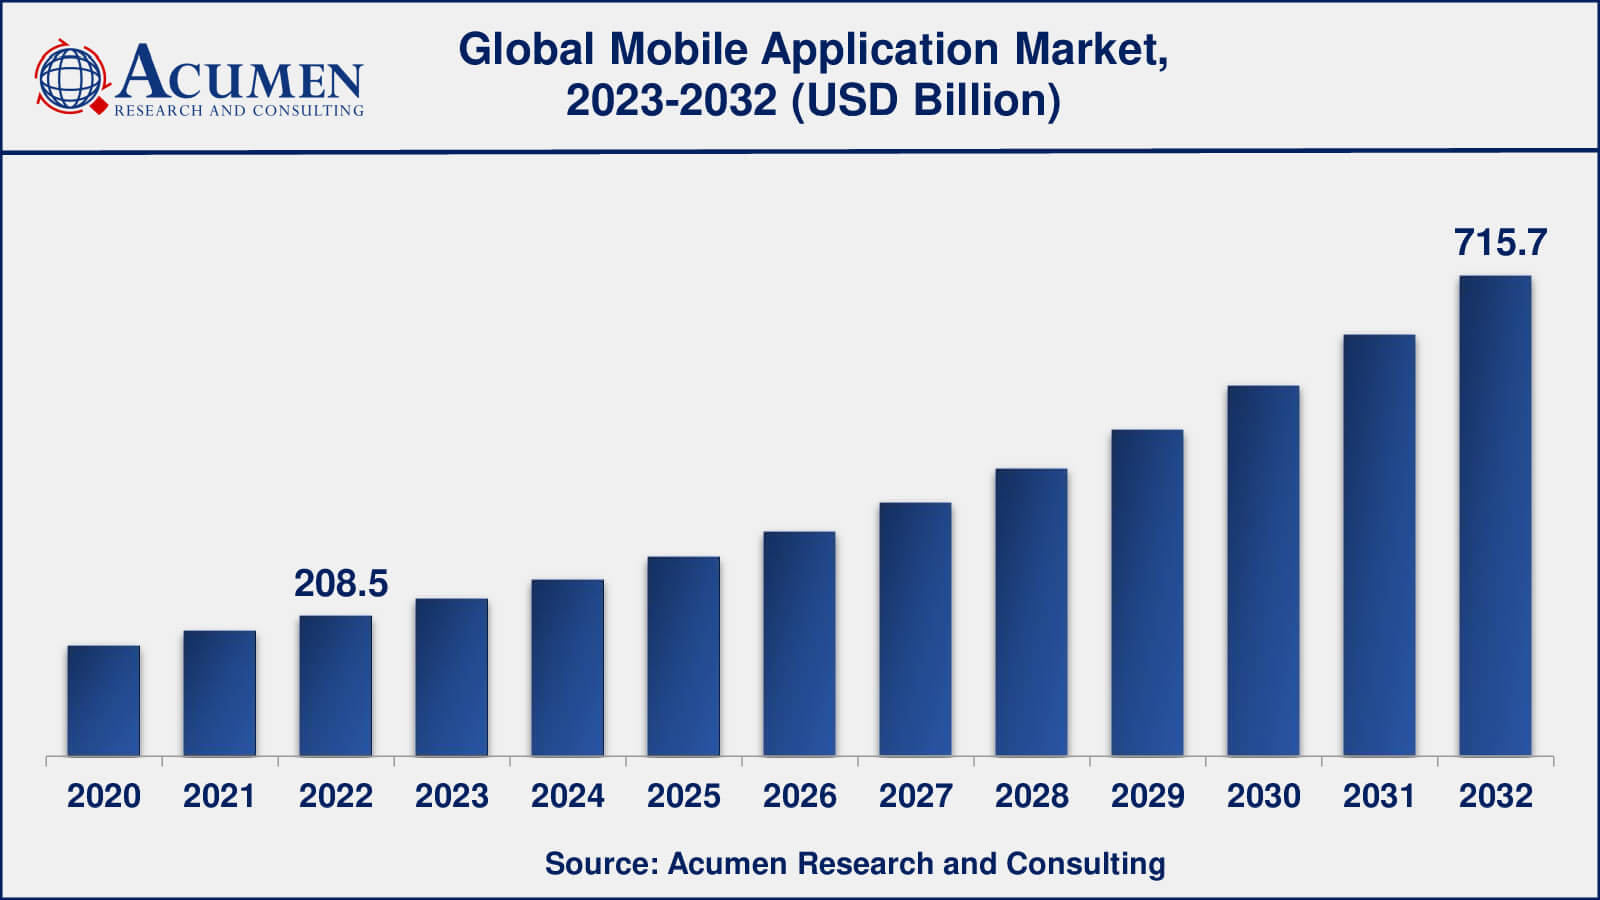 Global Mobile Application Market Dynamics